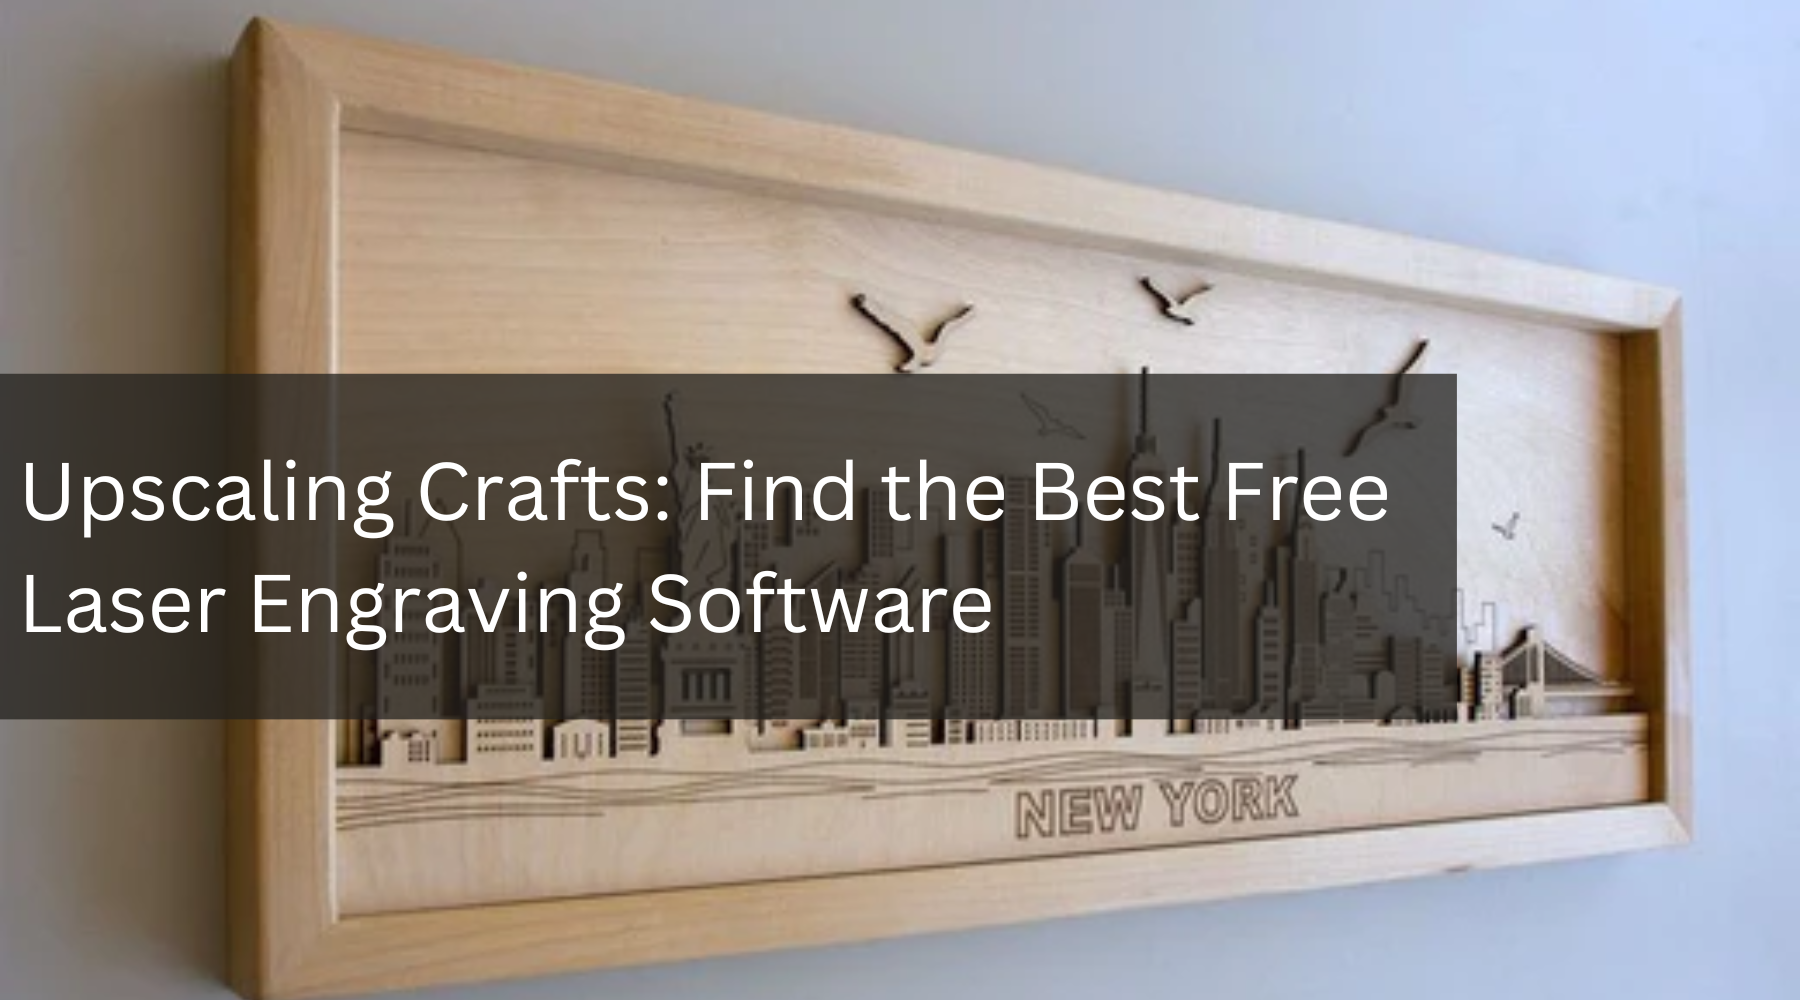 Upscaling Crafts: Find the Best Free Laser Engraving Software